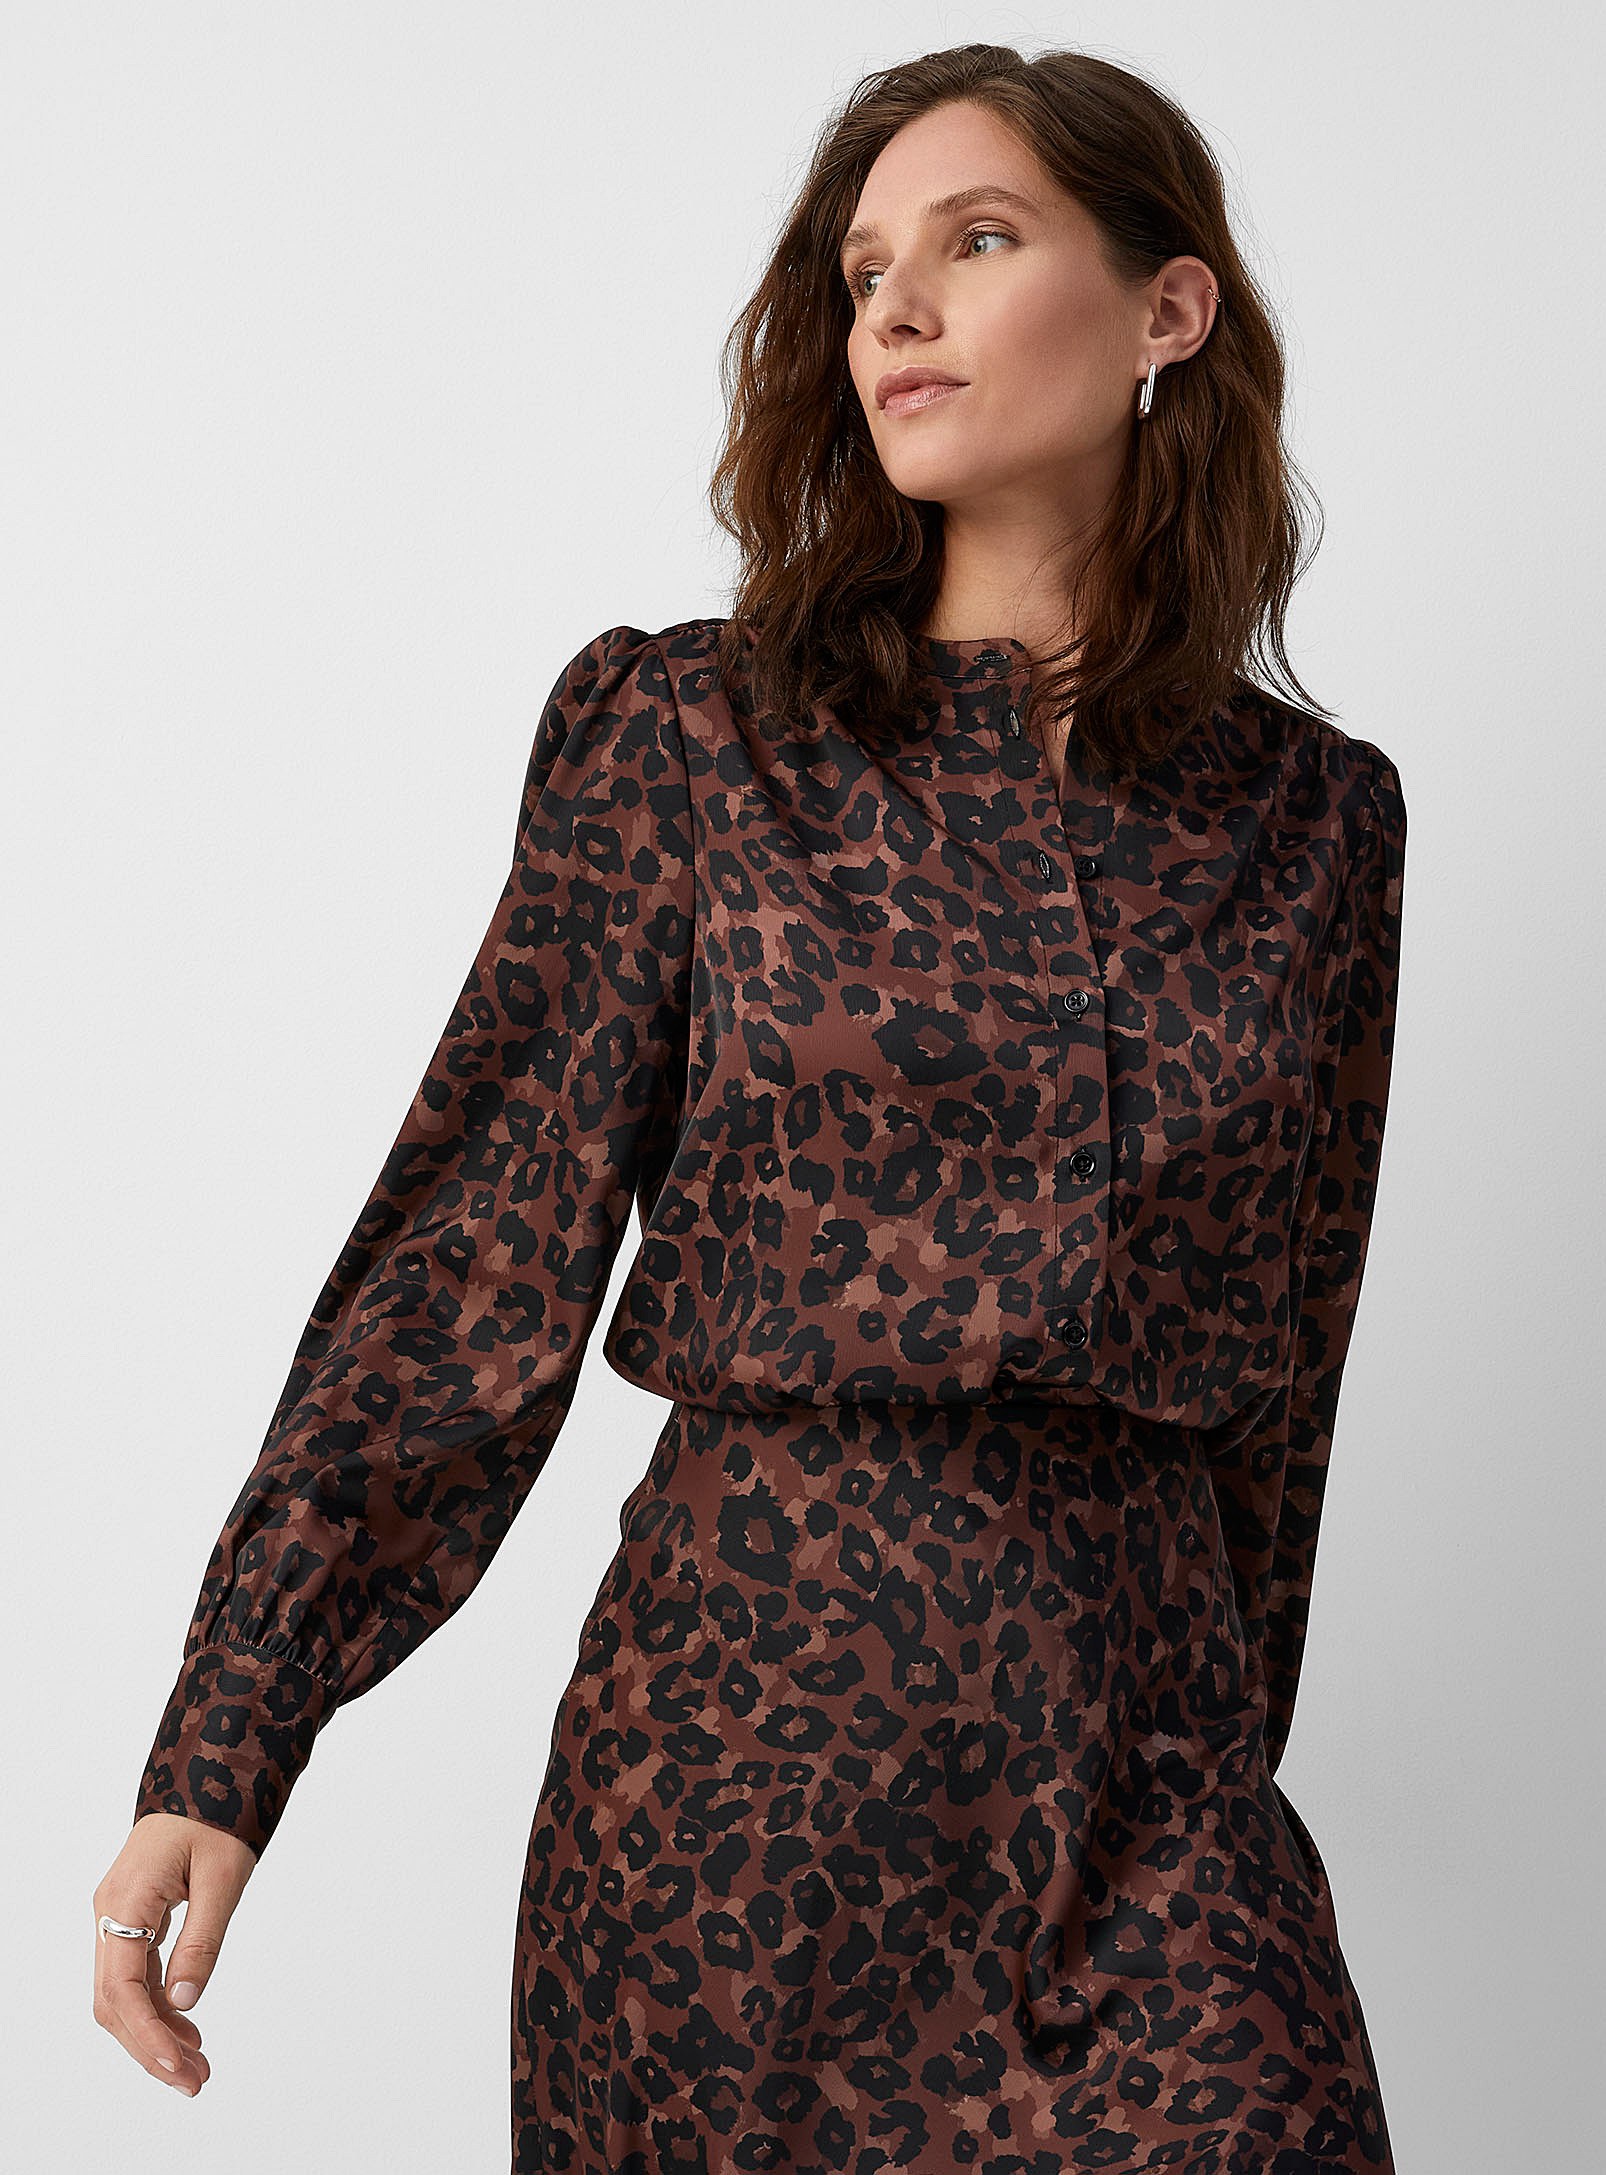 Contemporaine - Women's Nocturnal leopard satin shirt